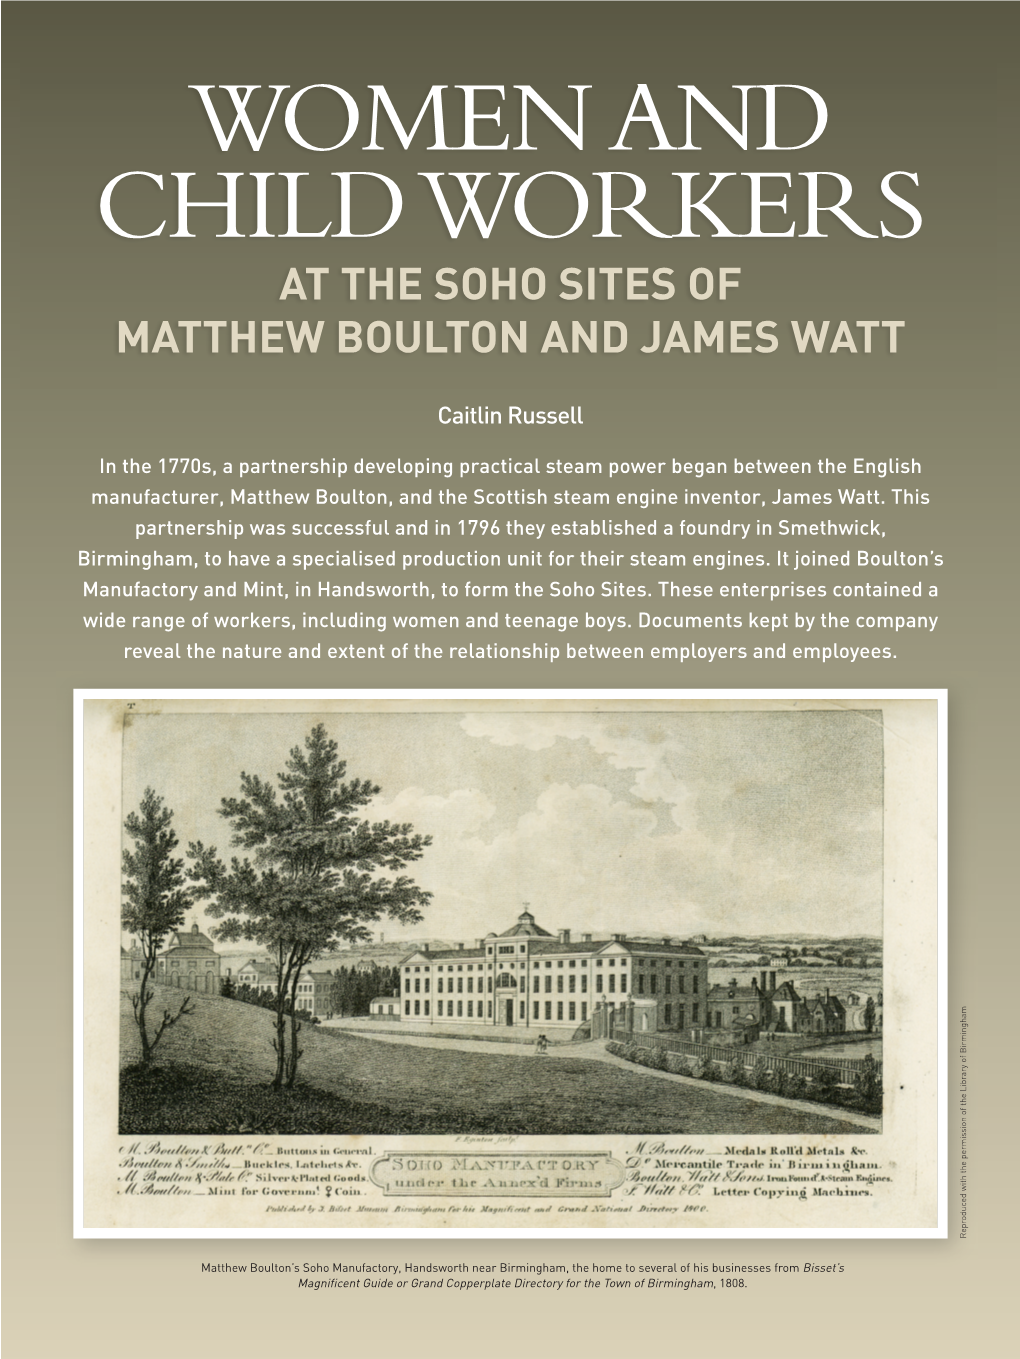 At the Soho Sites of Matthew Boulton and James Watt